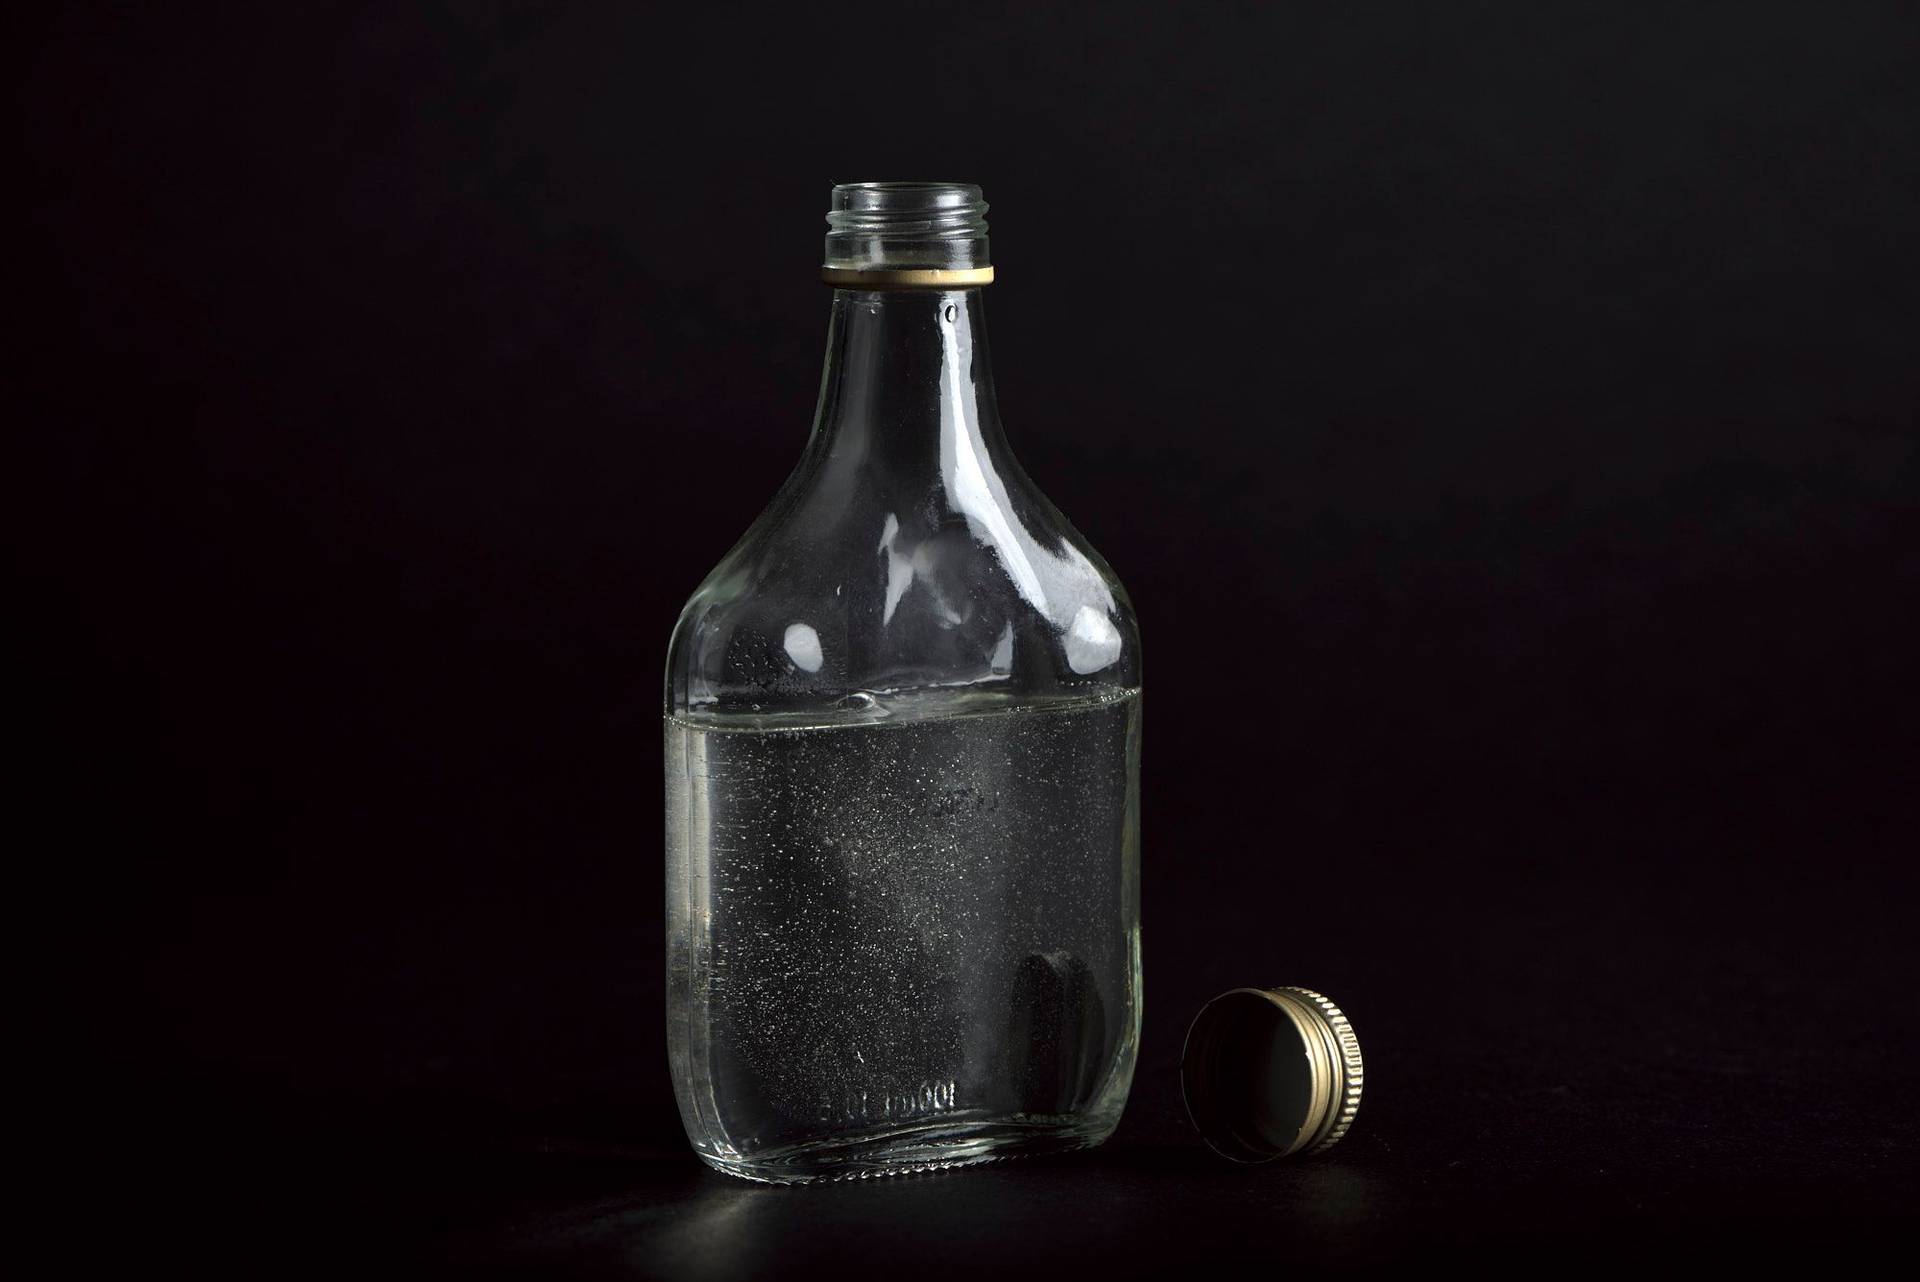 a glass bottle of sugar syrup on black background